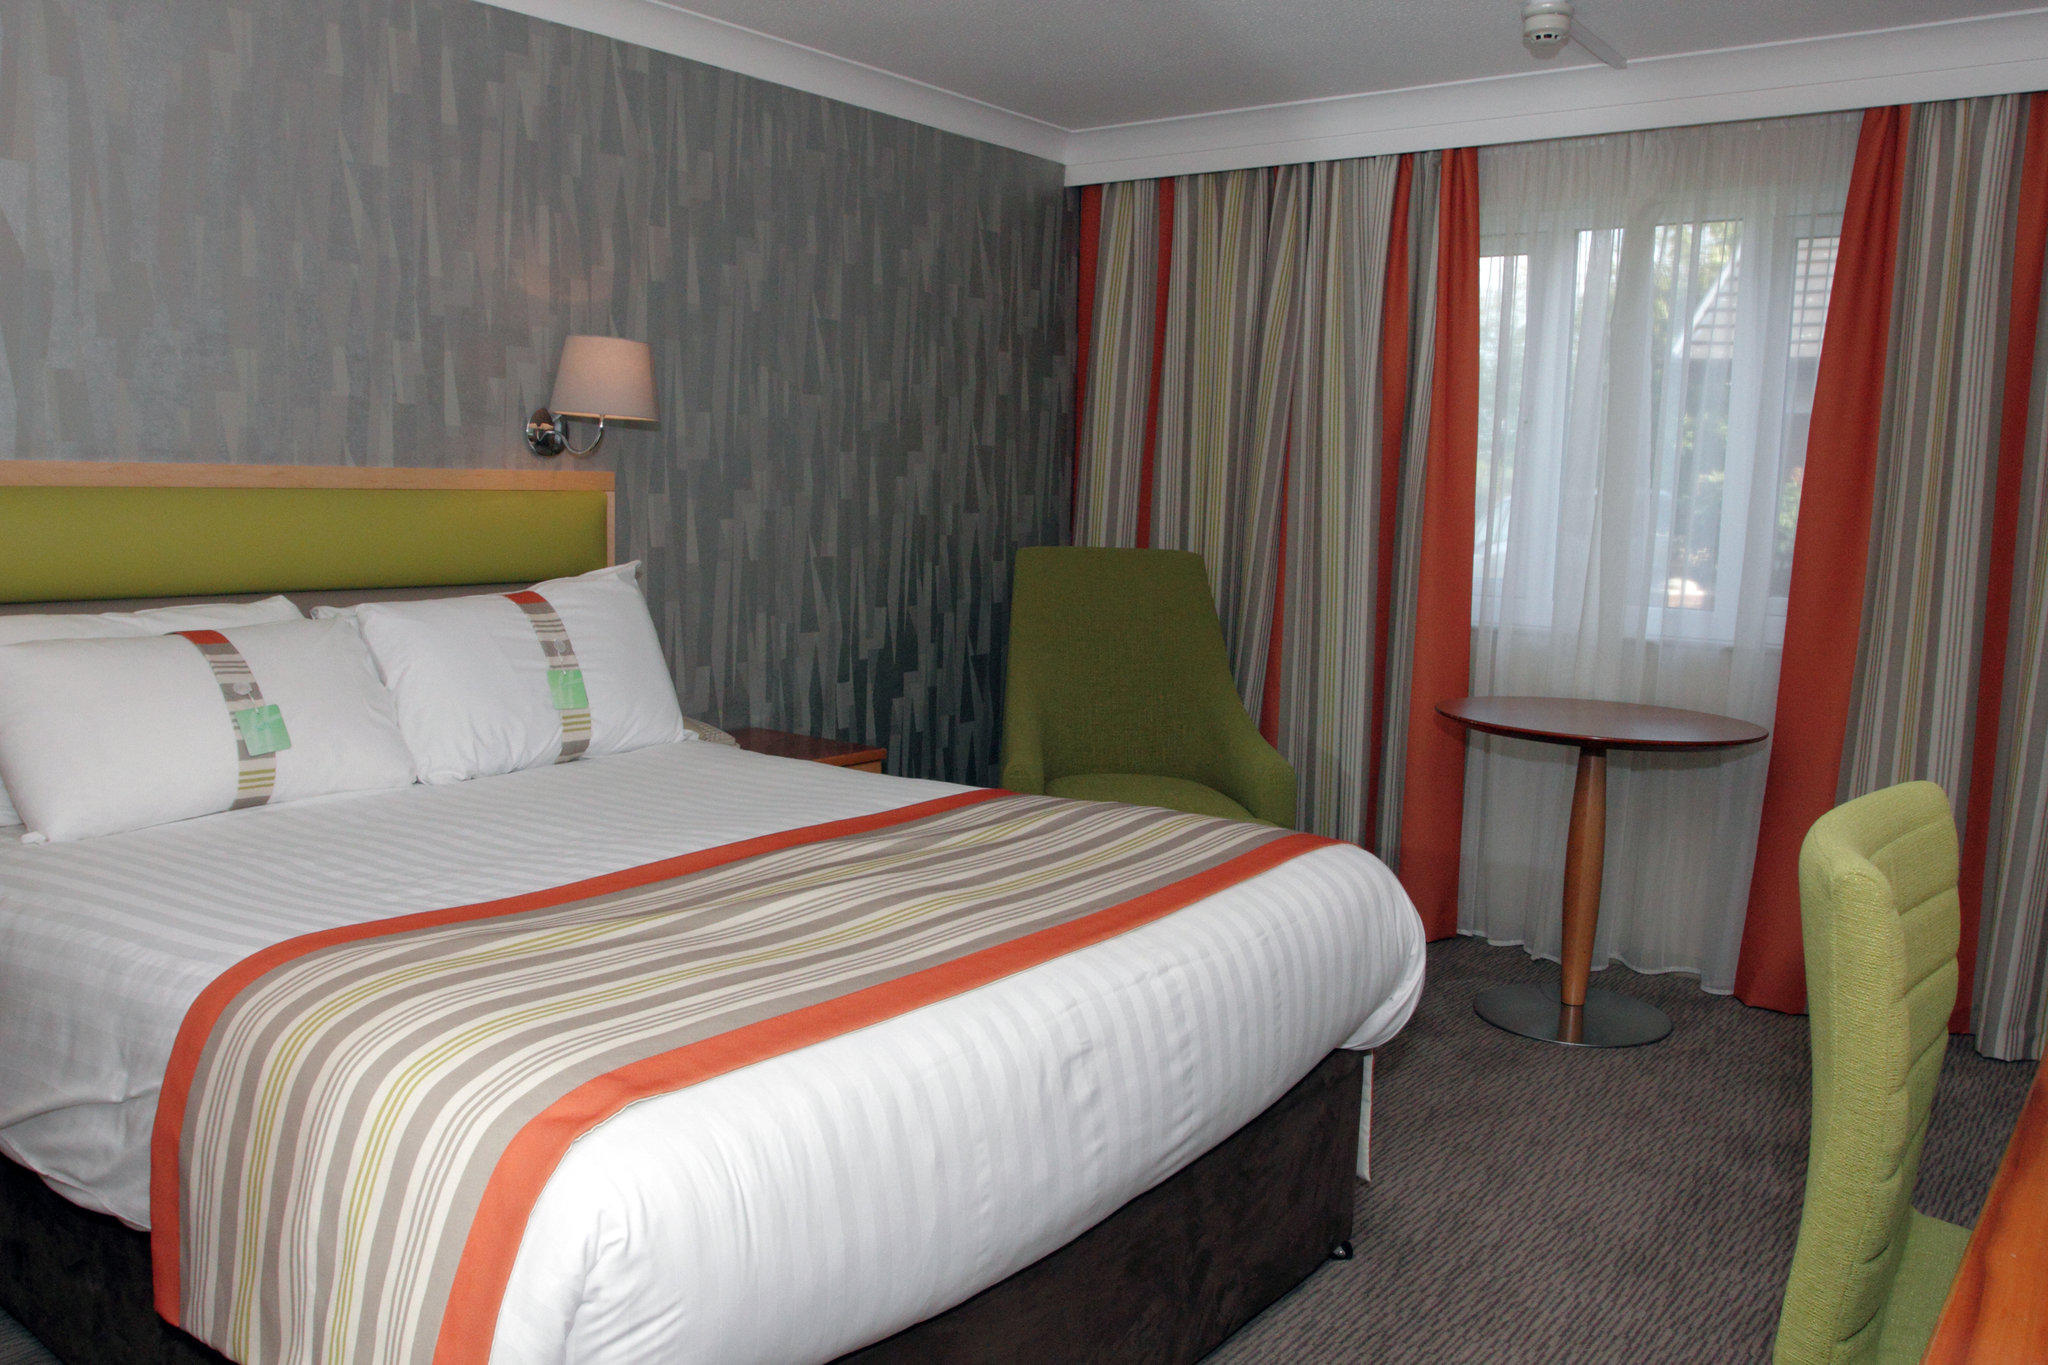 Holiday Inn A55 Chester West, an IHG Hotel Chester 01244 550011